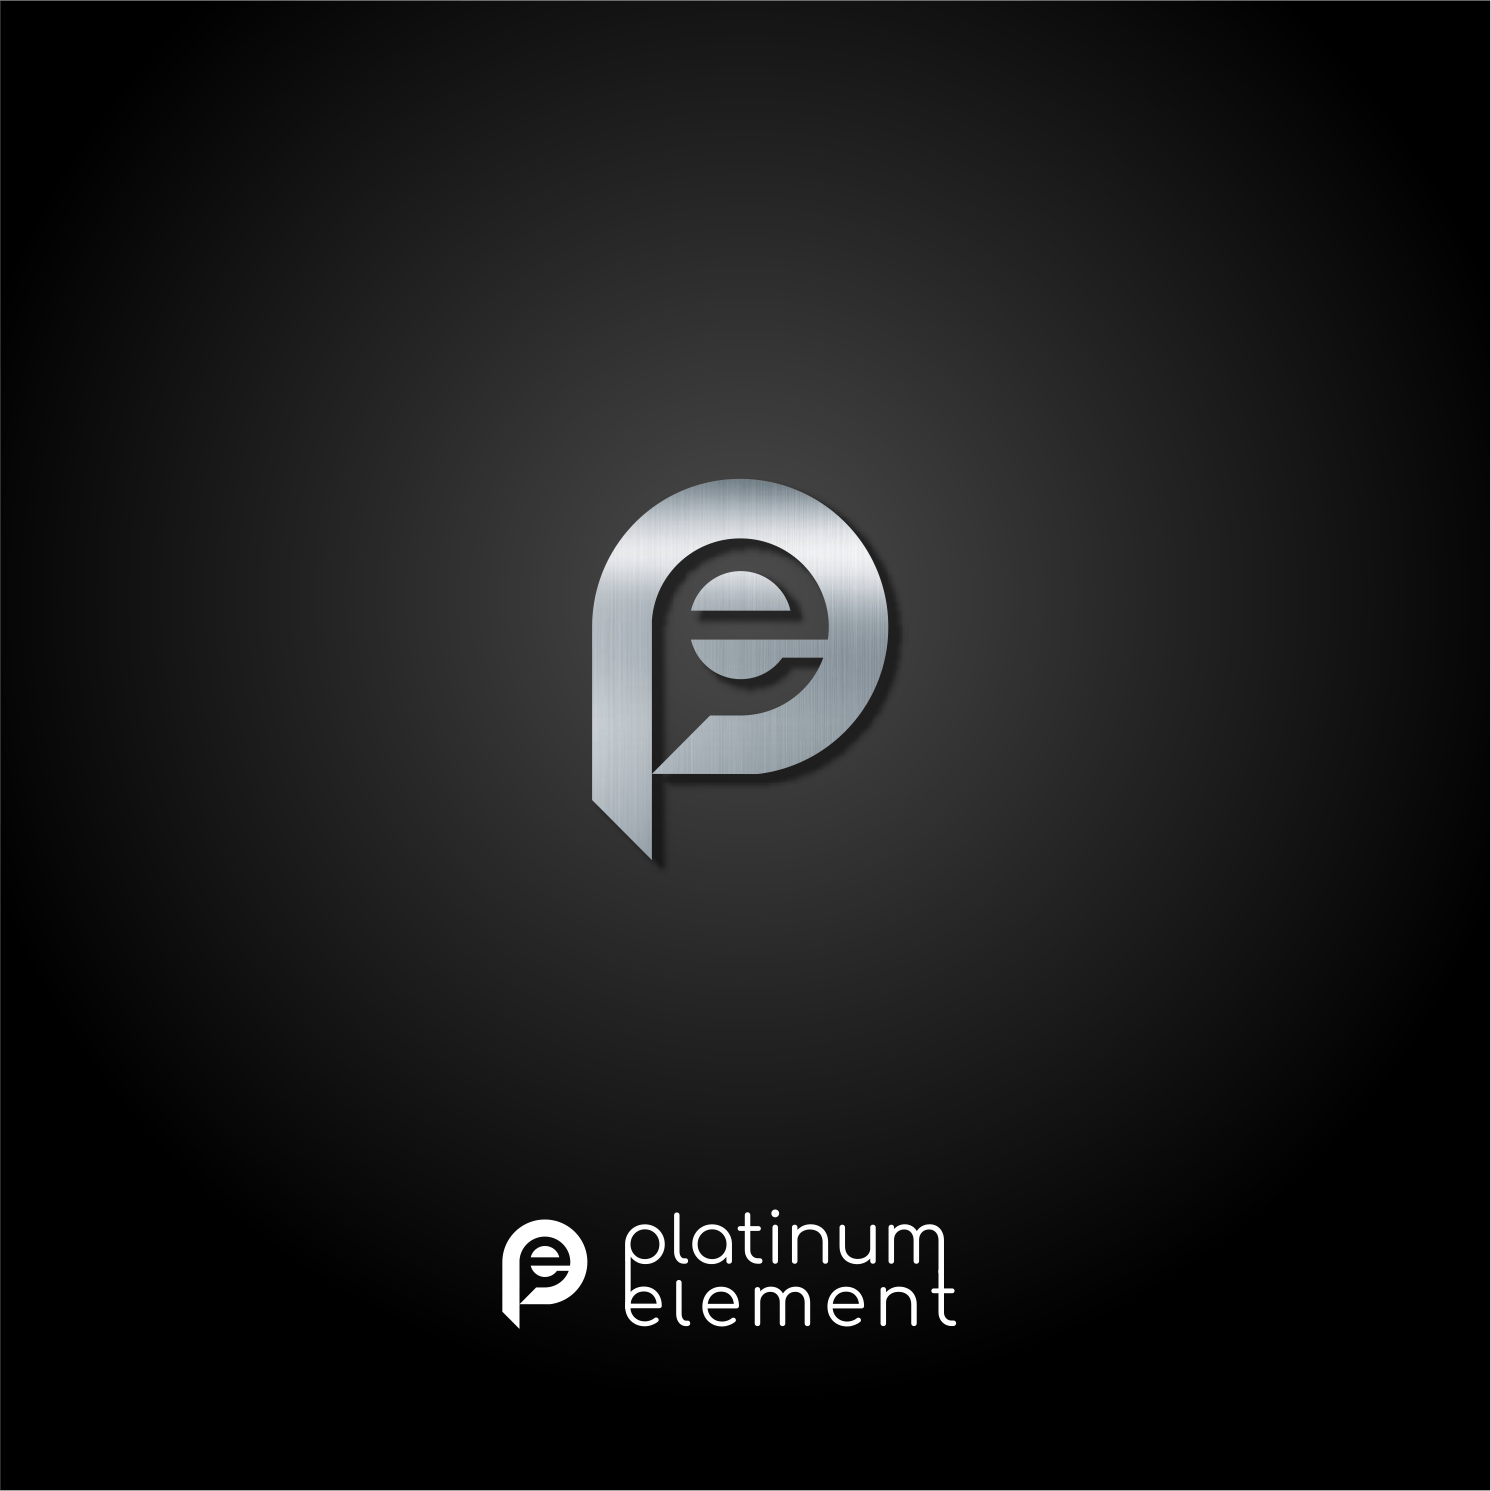 Platinum P Logo - Upmarket, Modern, Sales Logo Design for Platinum Element and PE